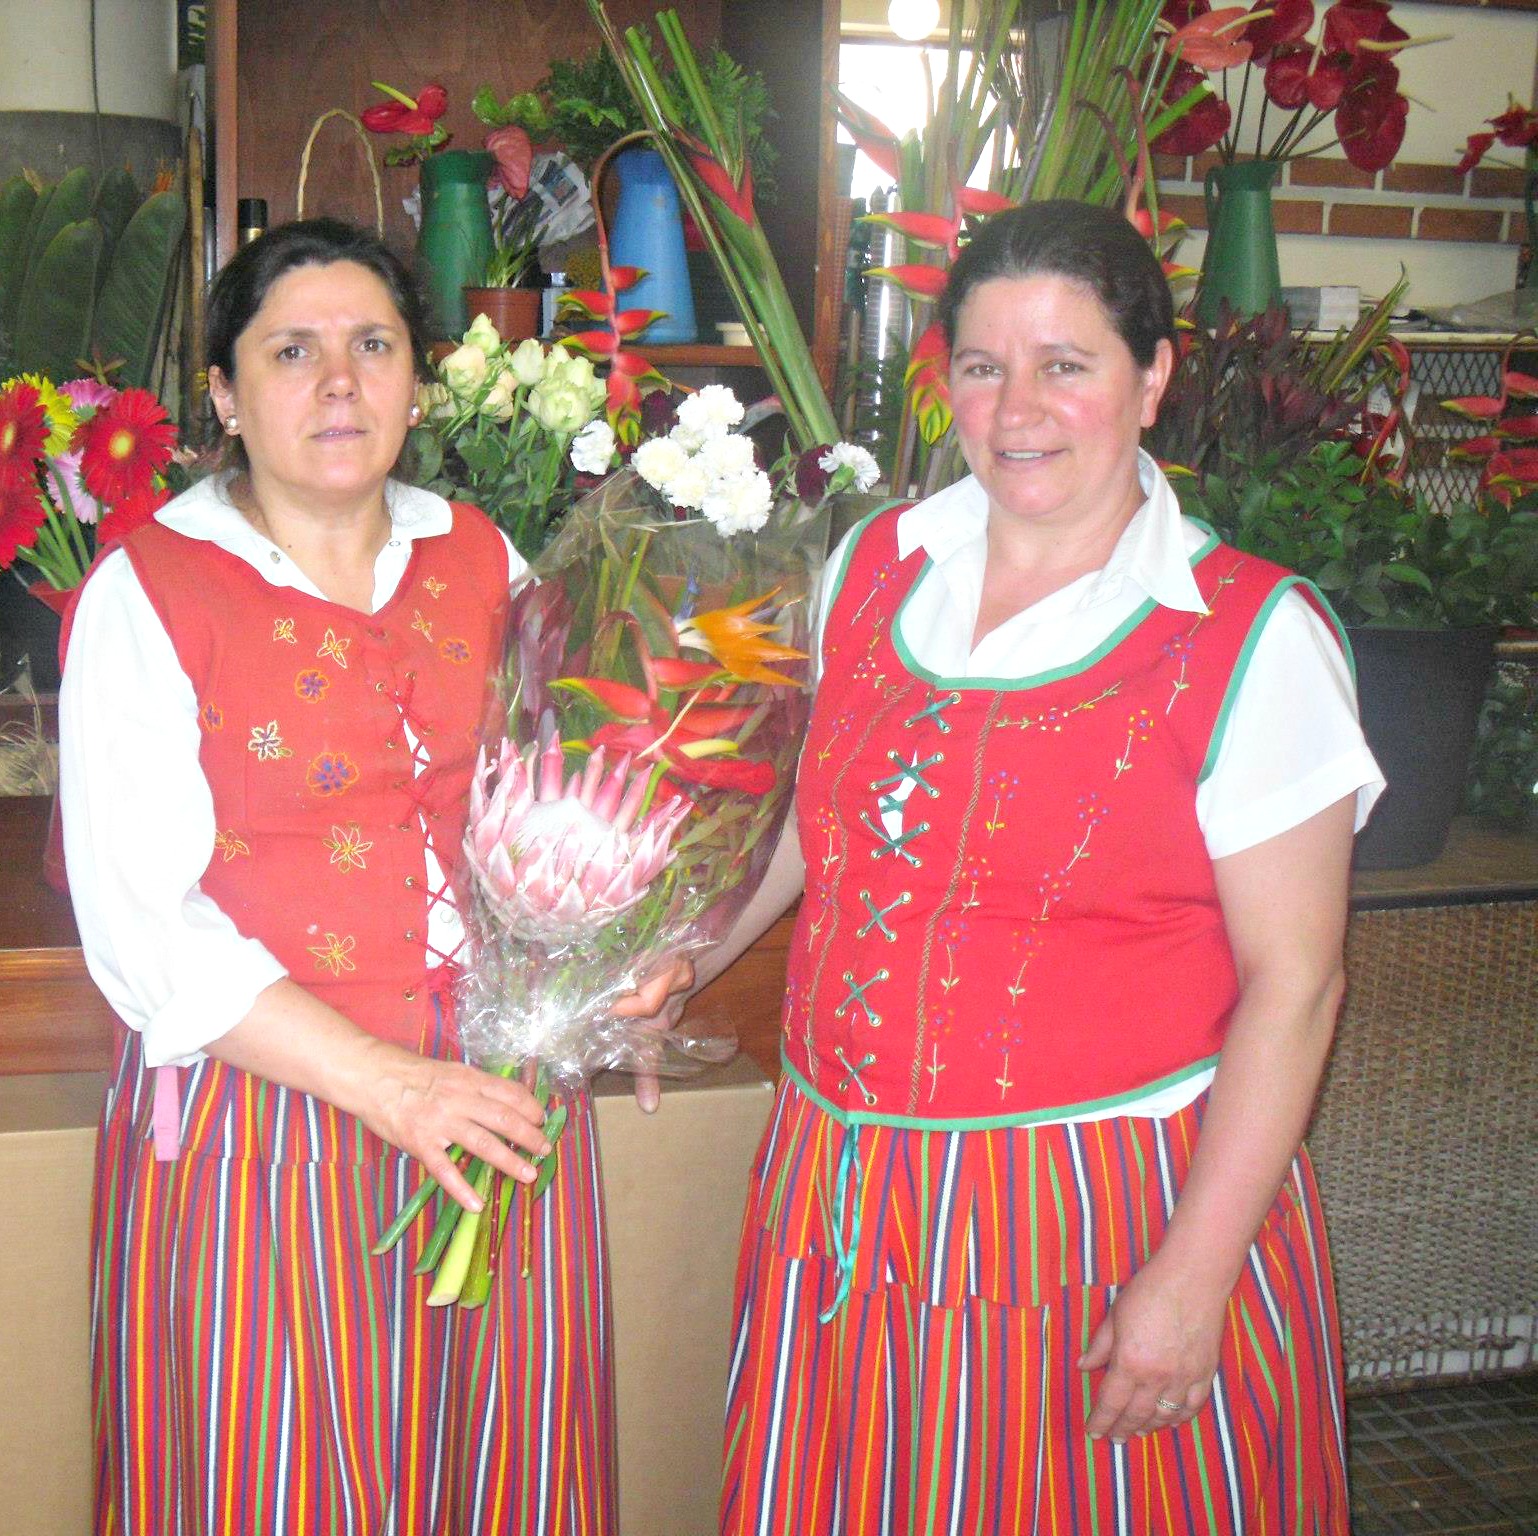 <img src="ana.jpg" alt="ana women wearing traditional folk costumes madeira"> 